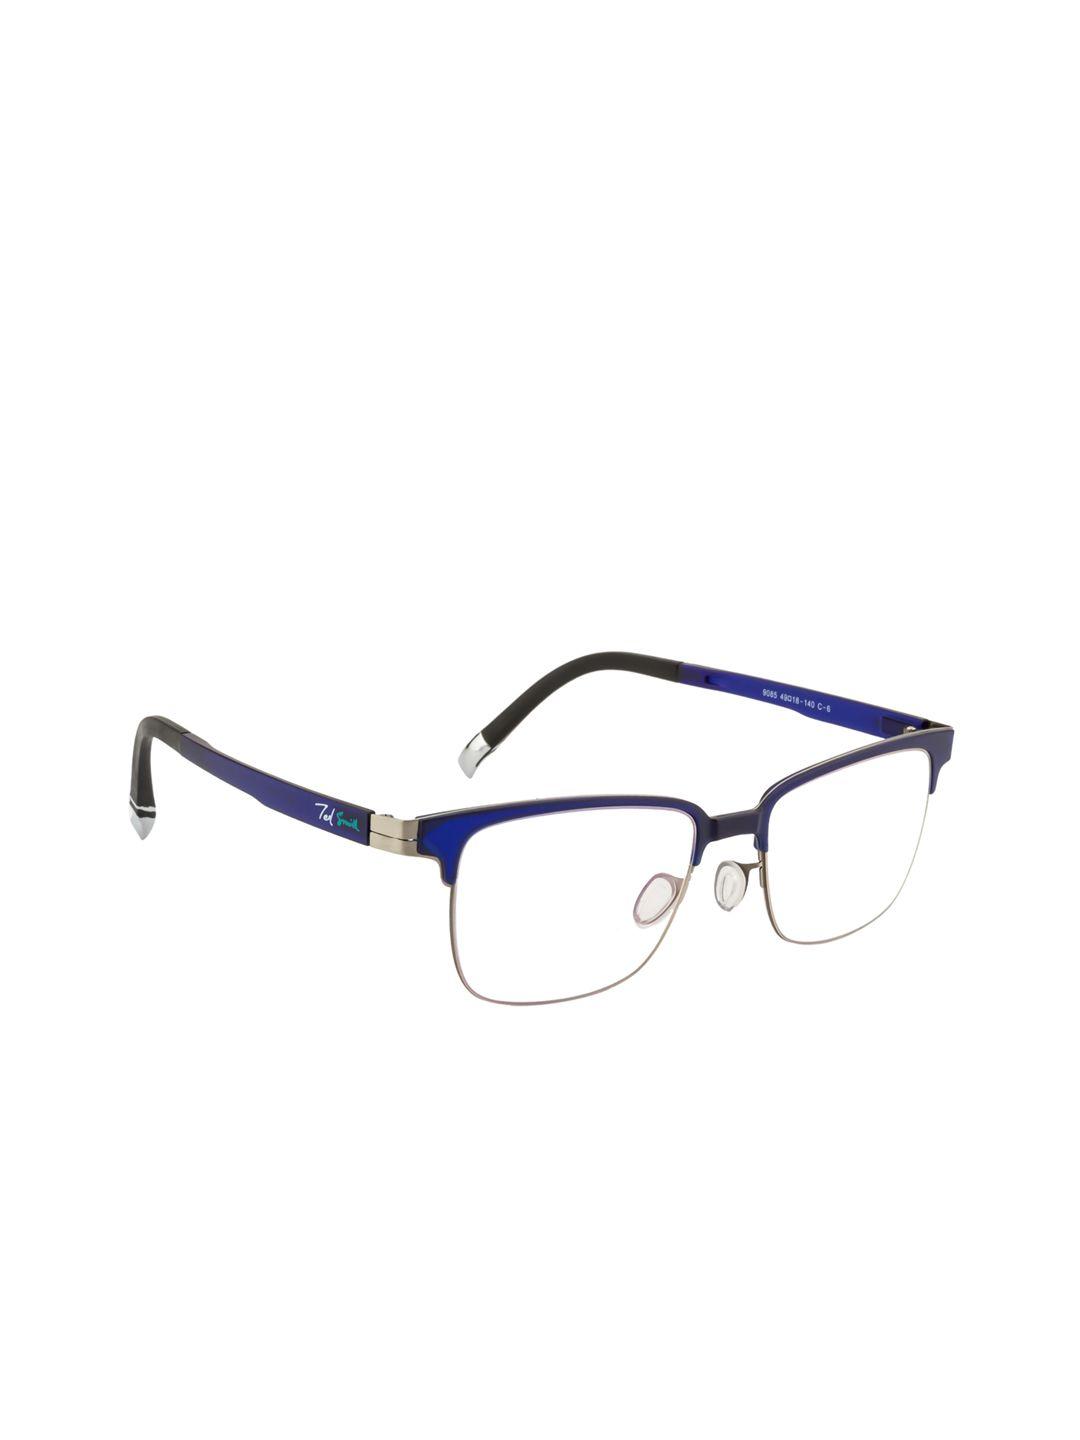 ted smith unisex blue solid half rim square frames eyeglasses